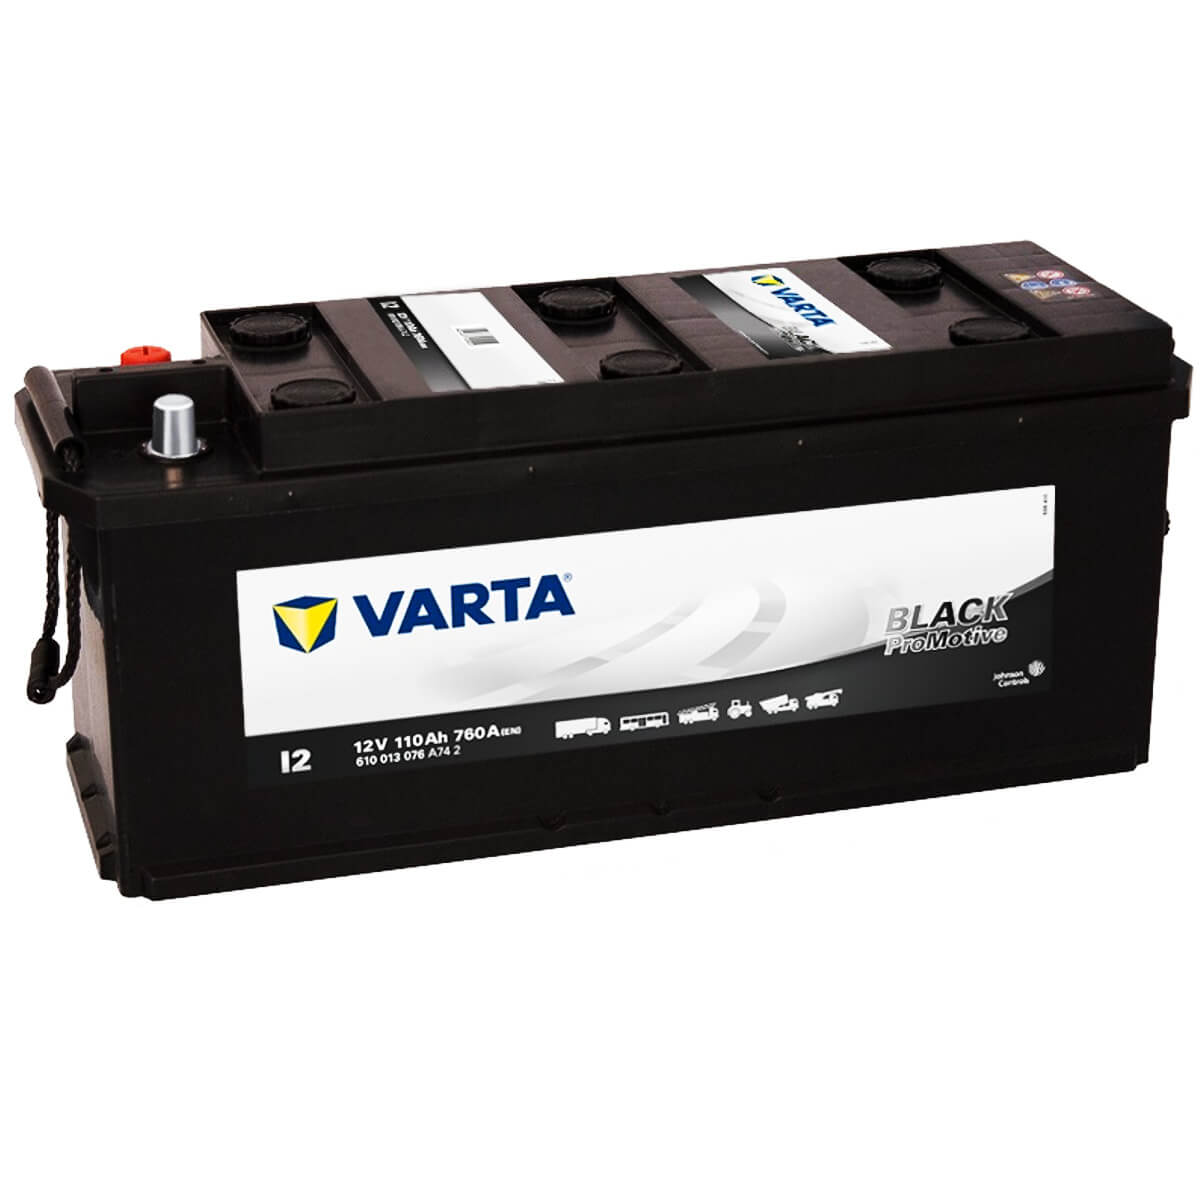 VARTA 00431101111 Batterie 431 — Elektro Pool